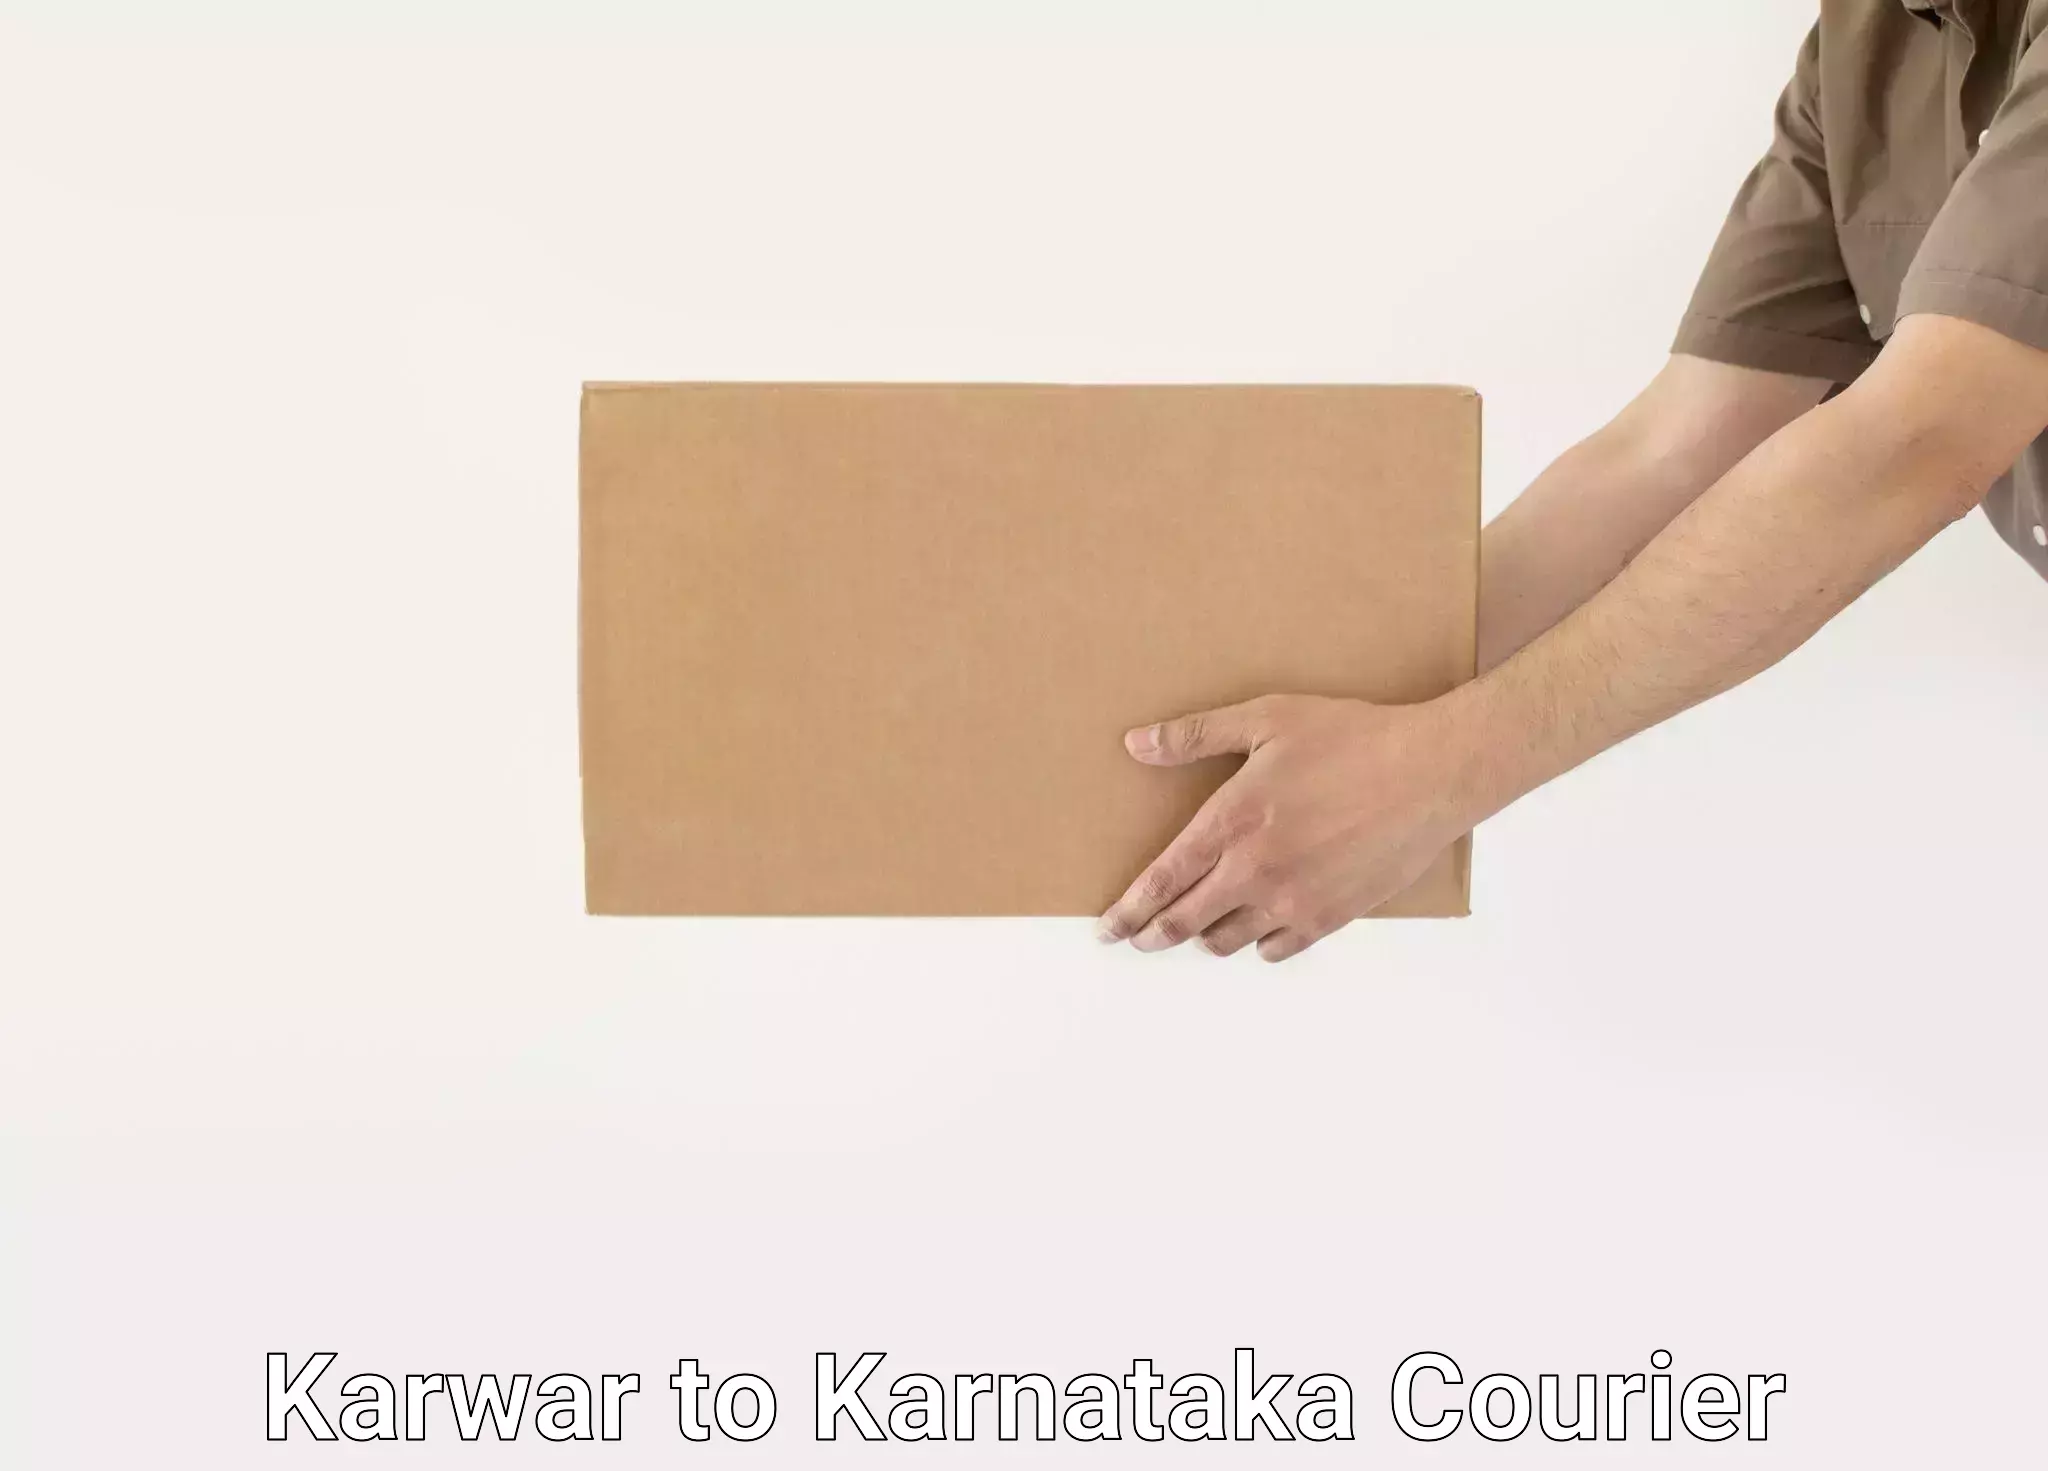 Home relocation experts Karwar to Karnataka